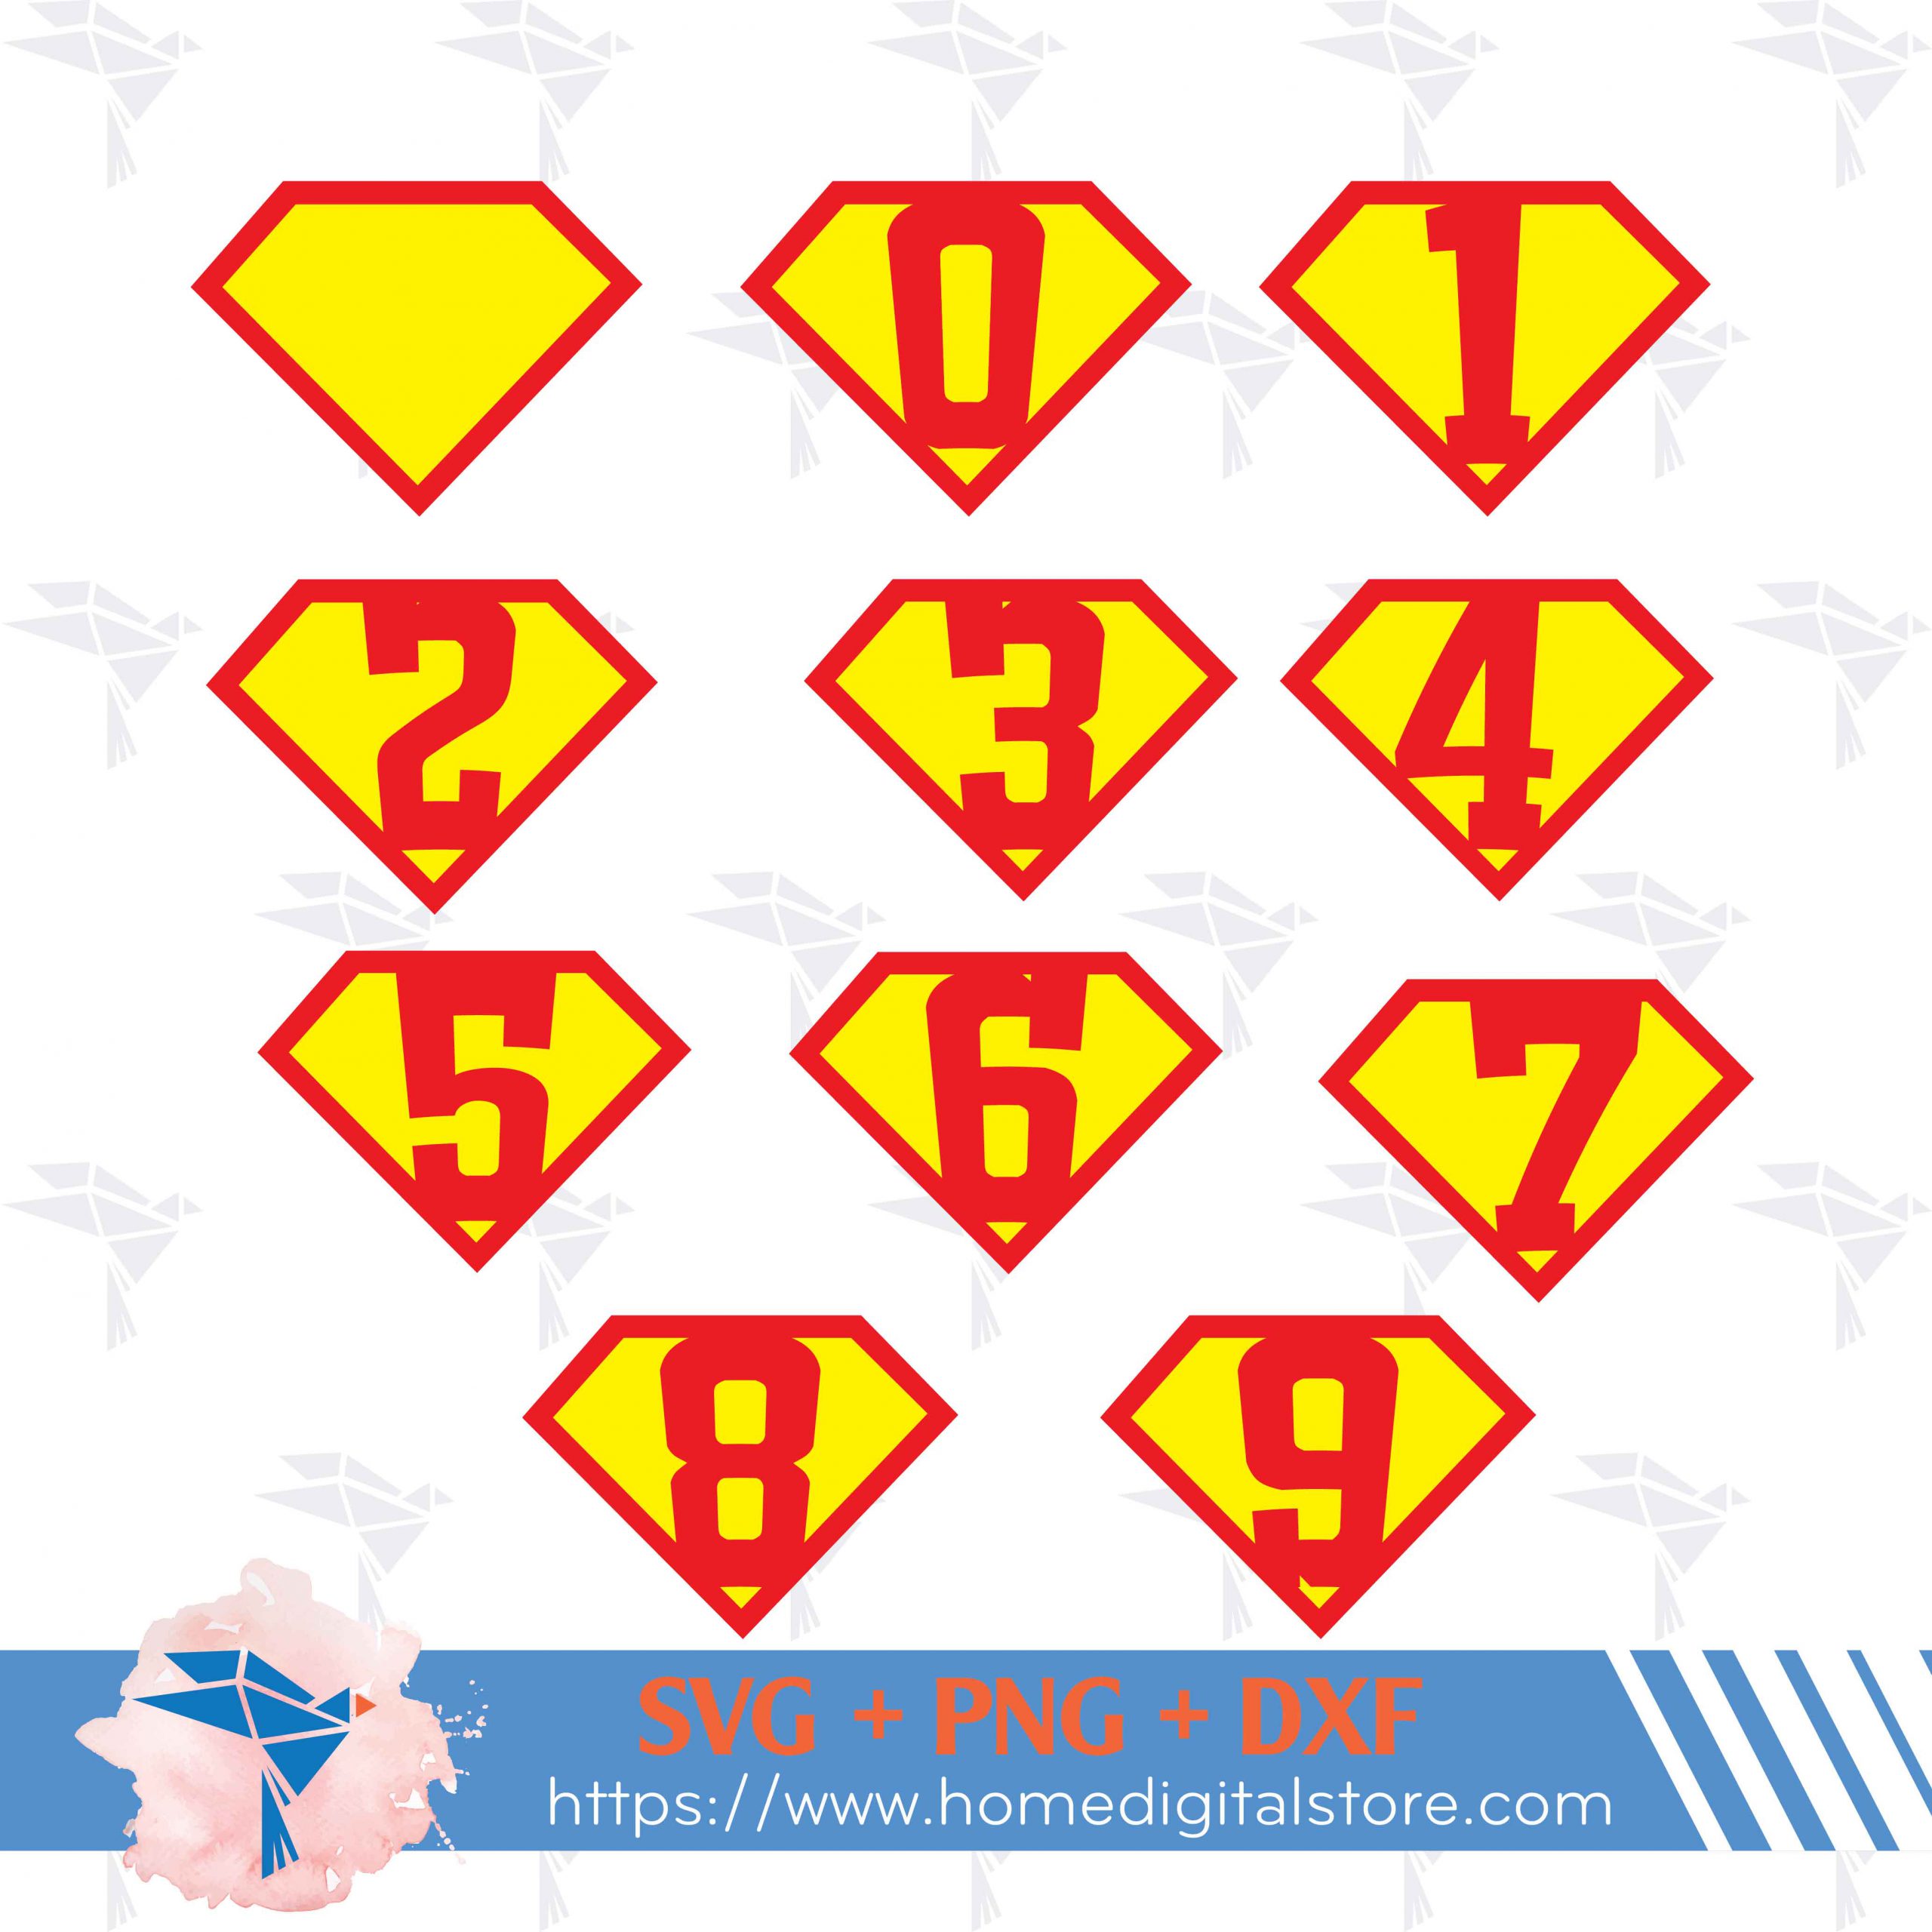 superman alphabet font